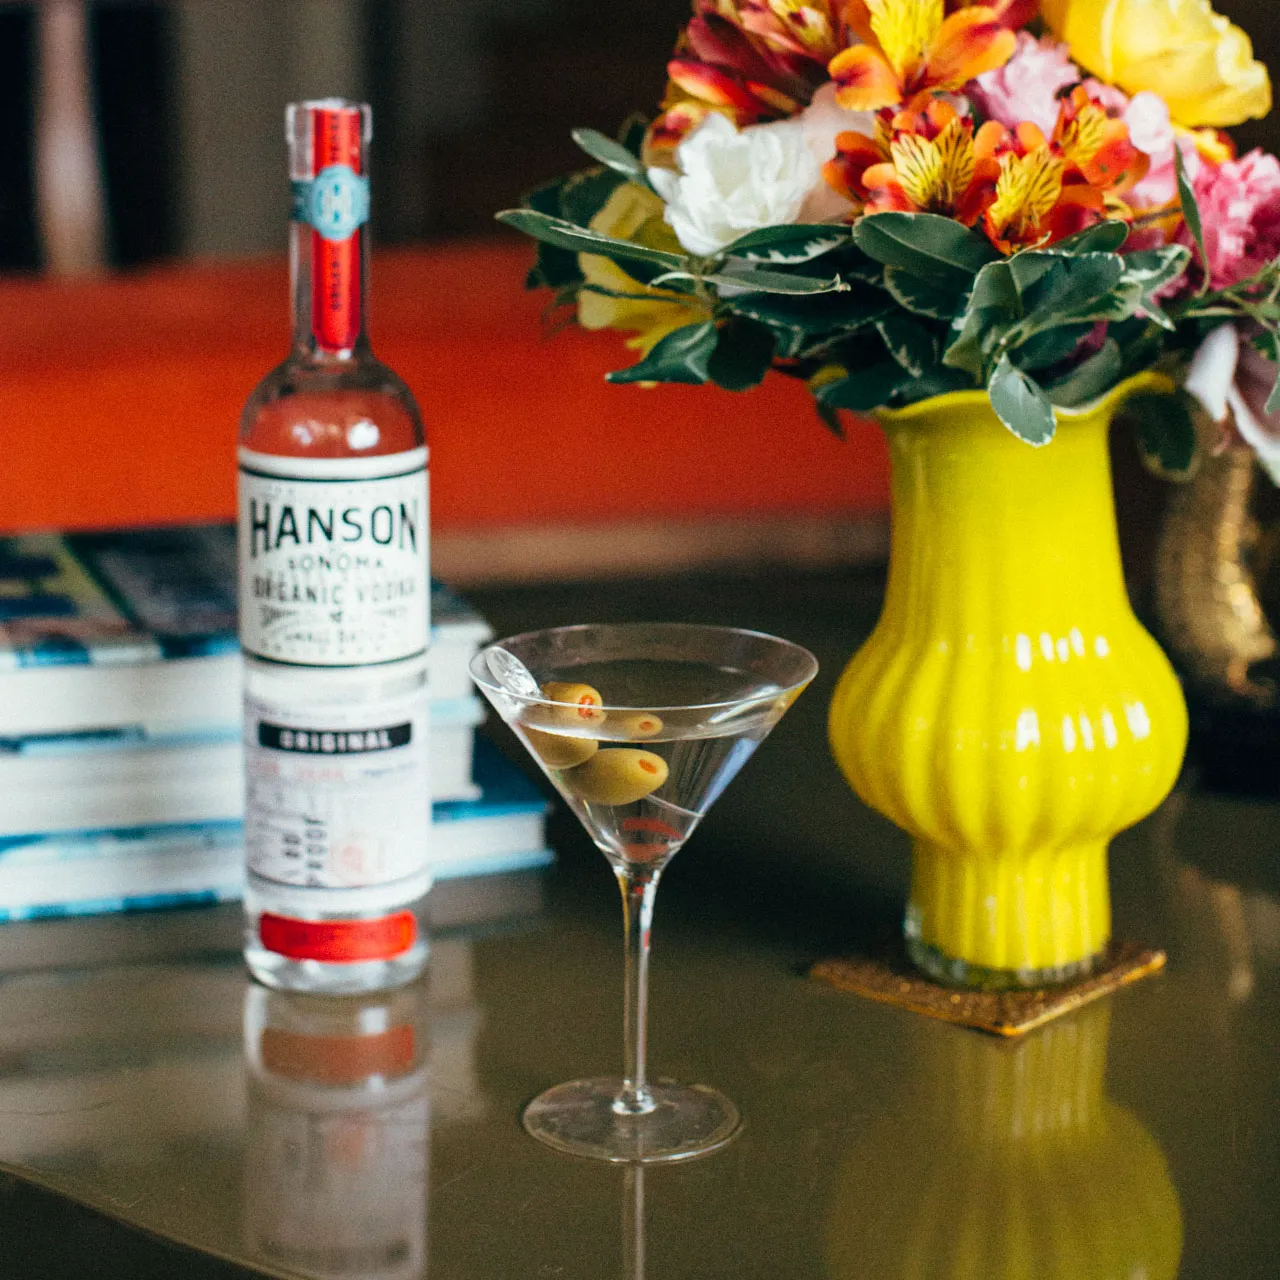 Dirty Martini cocktail, made using Hanson Original Vodka